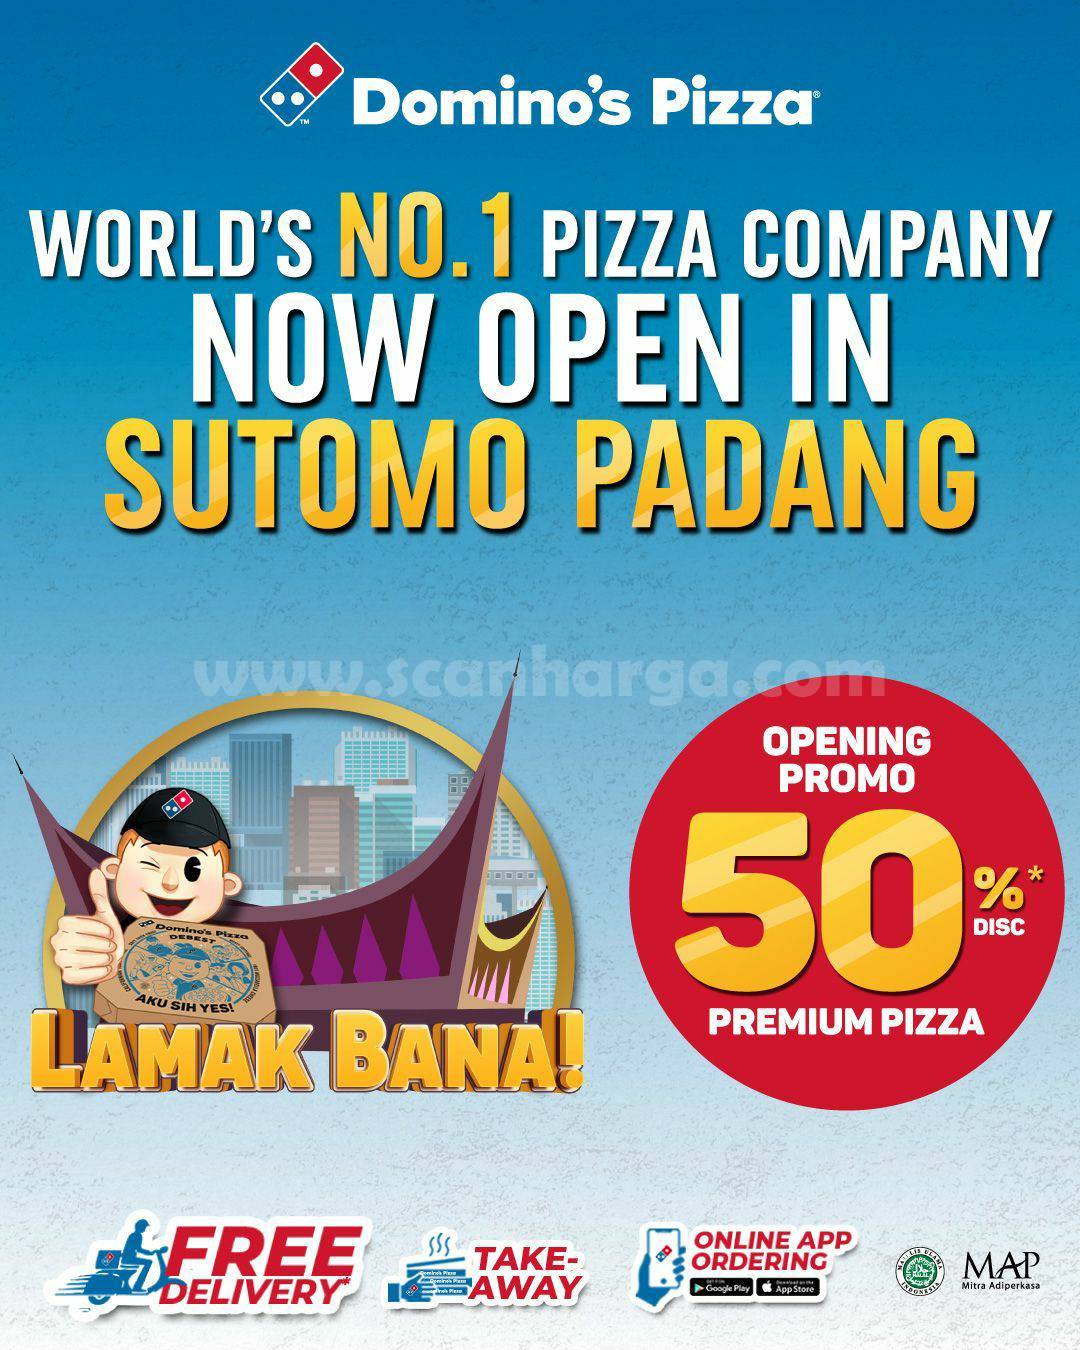 DOMINO'S PIZZA Sutomo Padang Grand Opening Promo – LAMAK BANA! DISKON 50%